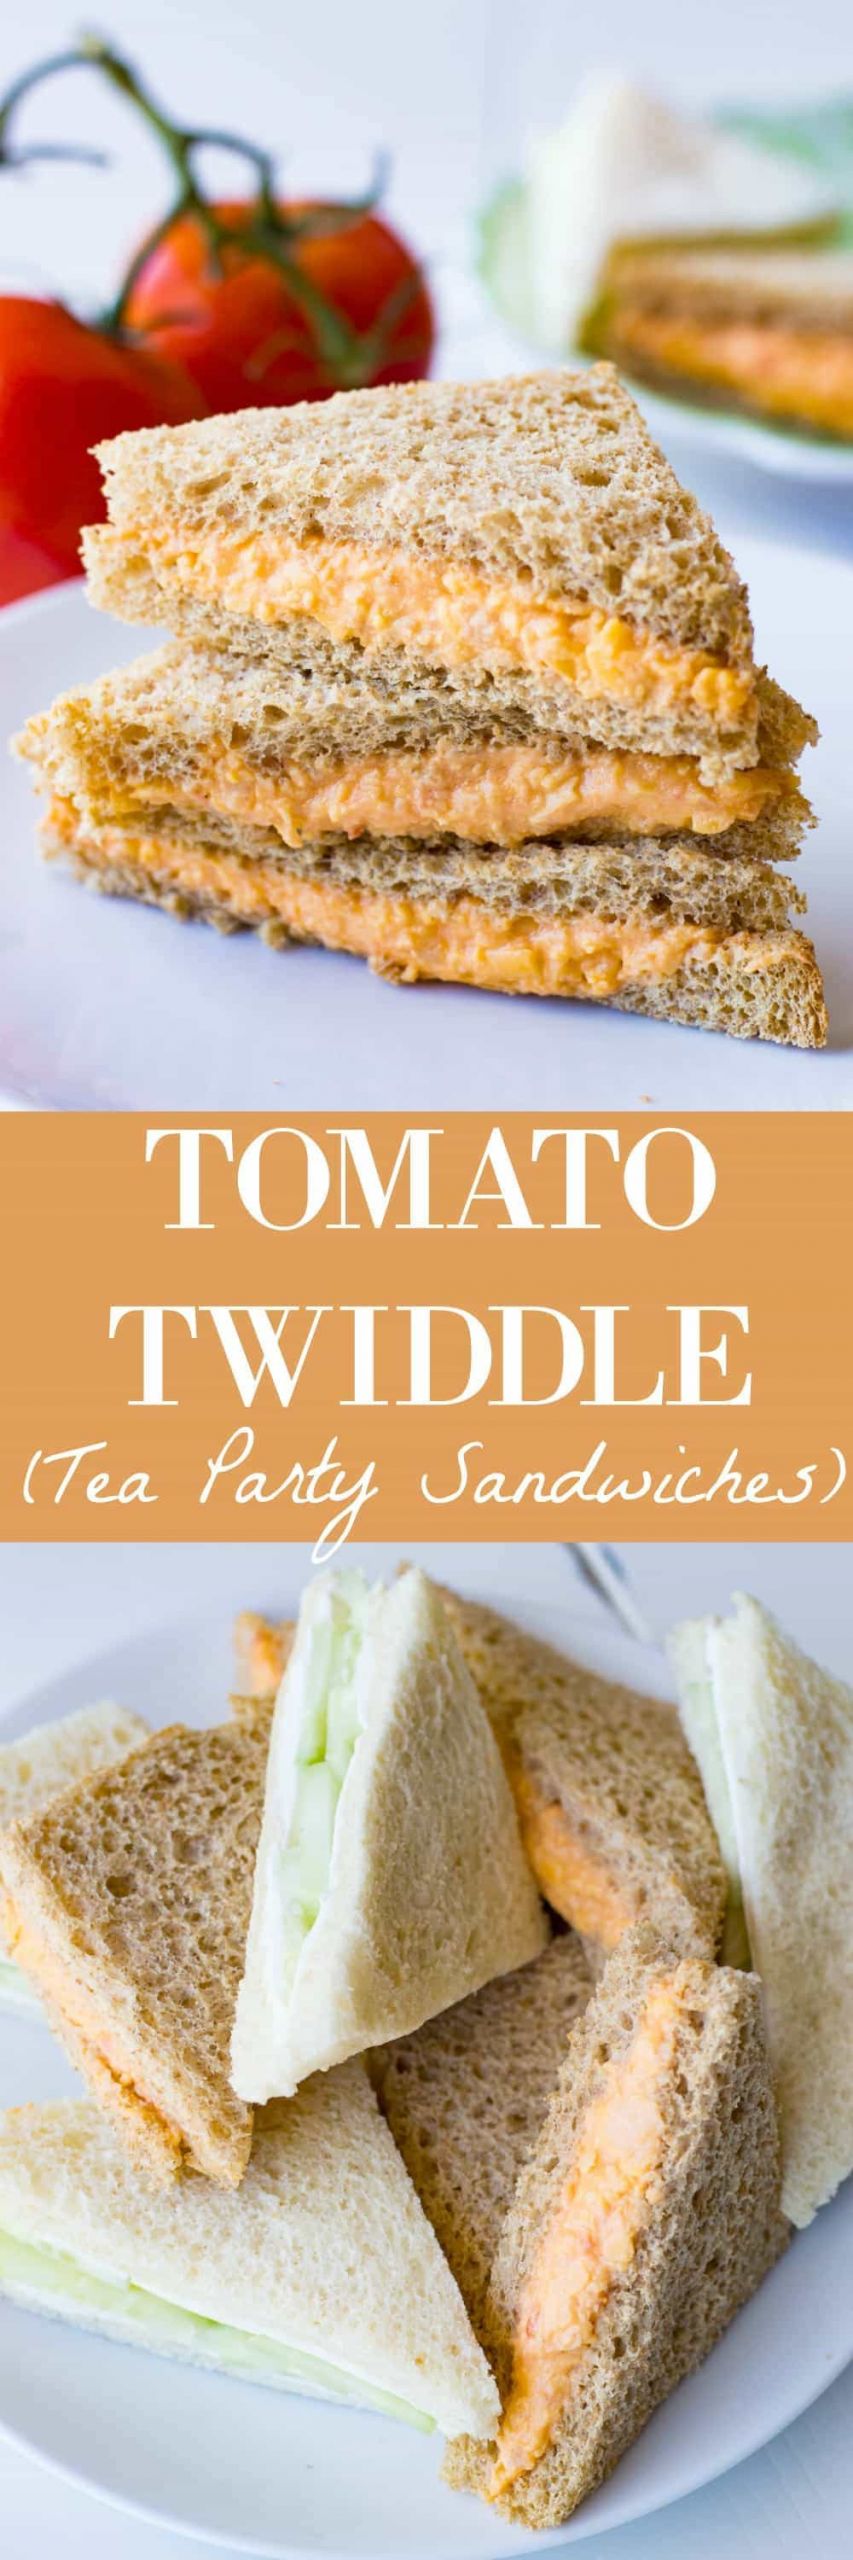 Tea Party Sandwich Ideas
 Tomato Twiddle Tea Party Sandwiches House of Yumm